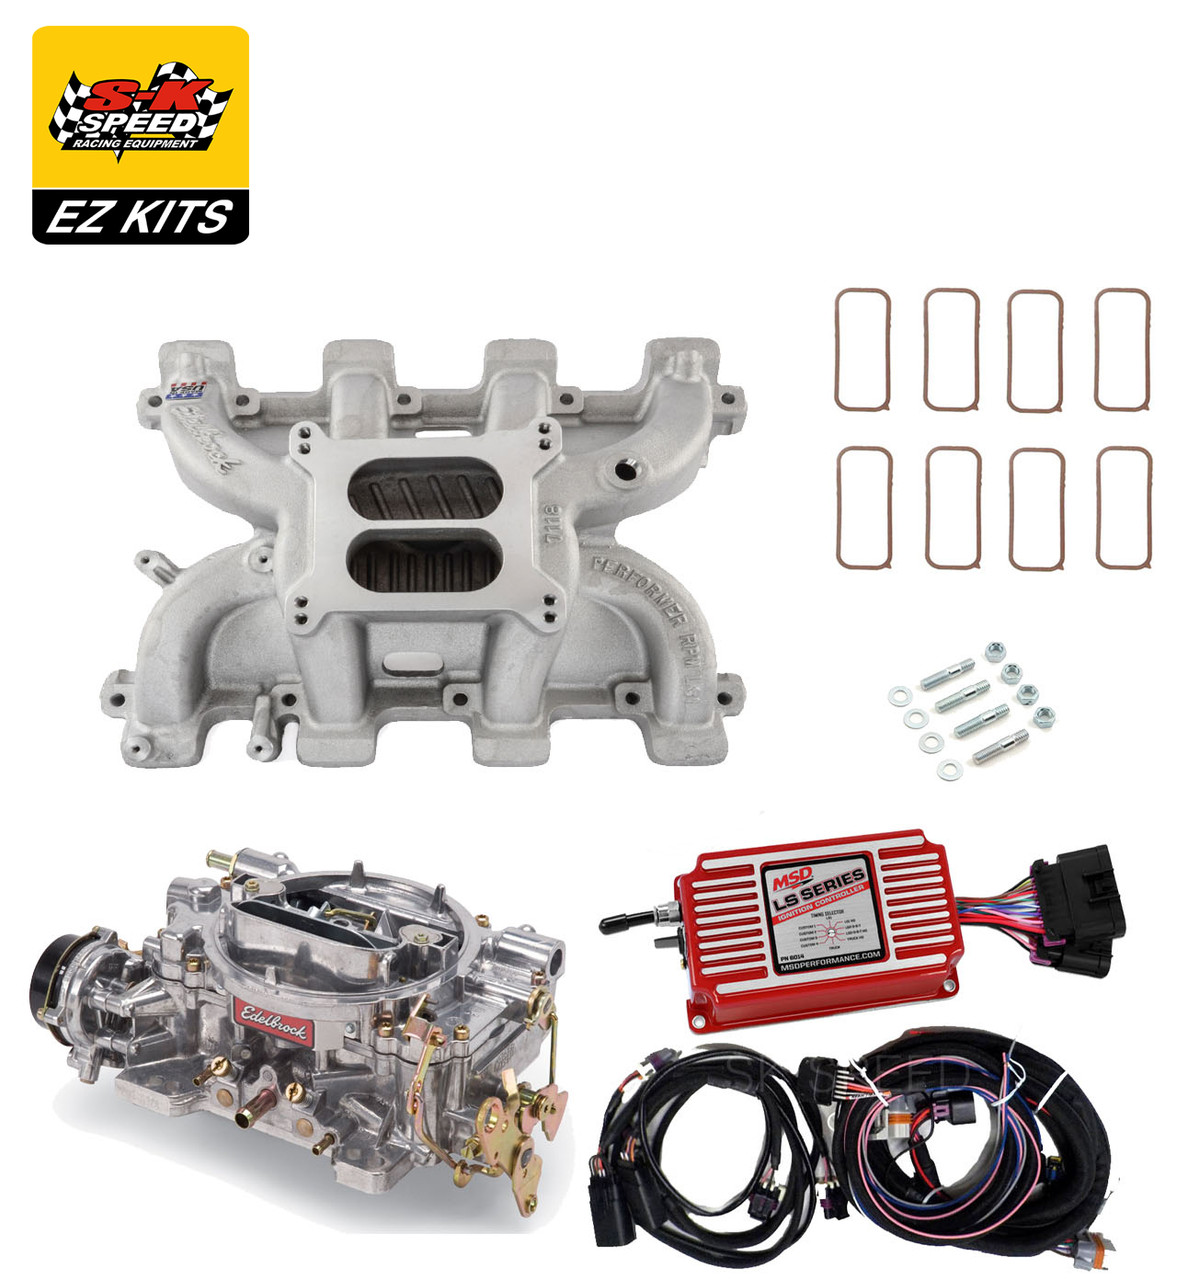 LS1 Carb Intake Kit - Edelbrock RPM Intake/MSD 6014 Ignition/Edelbrock 750 Carb